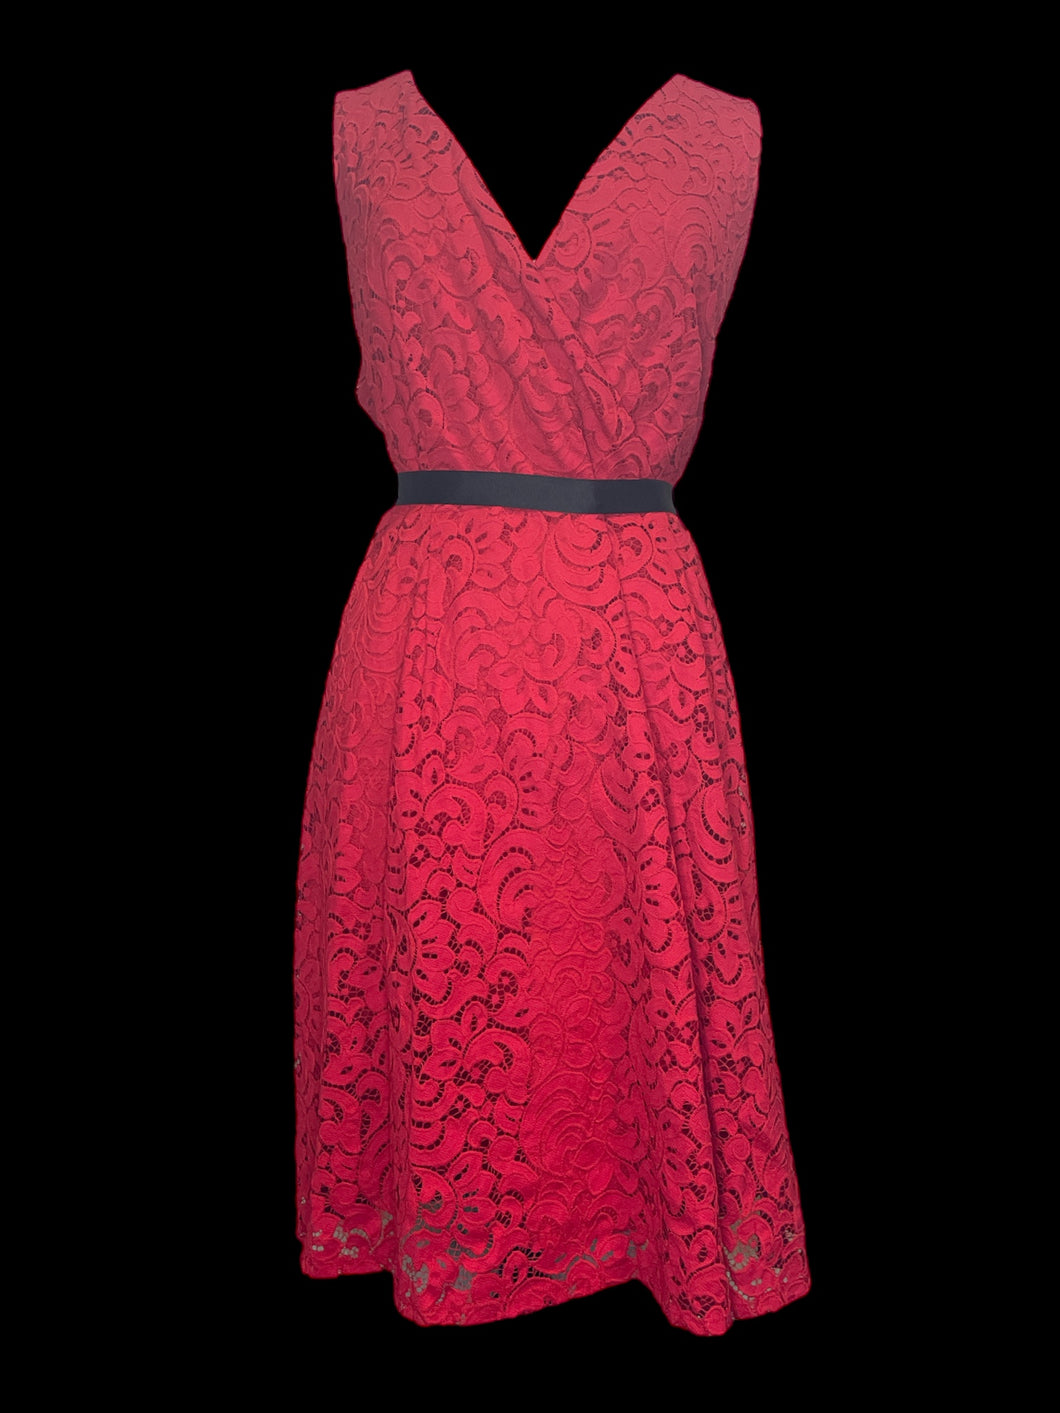 1X Red lace dress w/ mock wrap bust, black waist ribbon, belt loops, petticoat, & side zipper closure